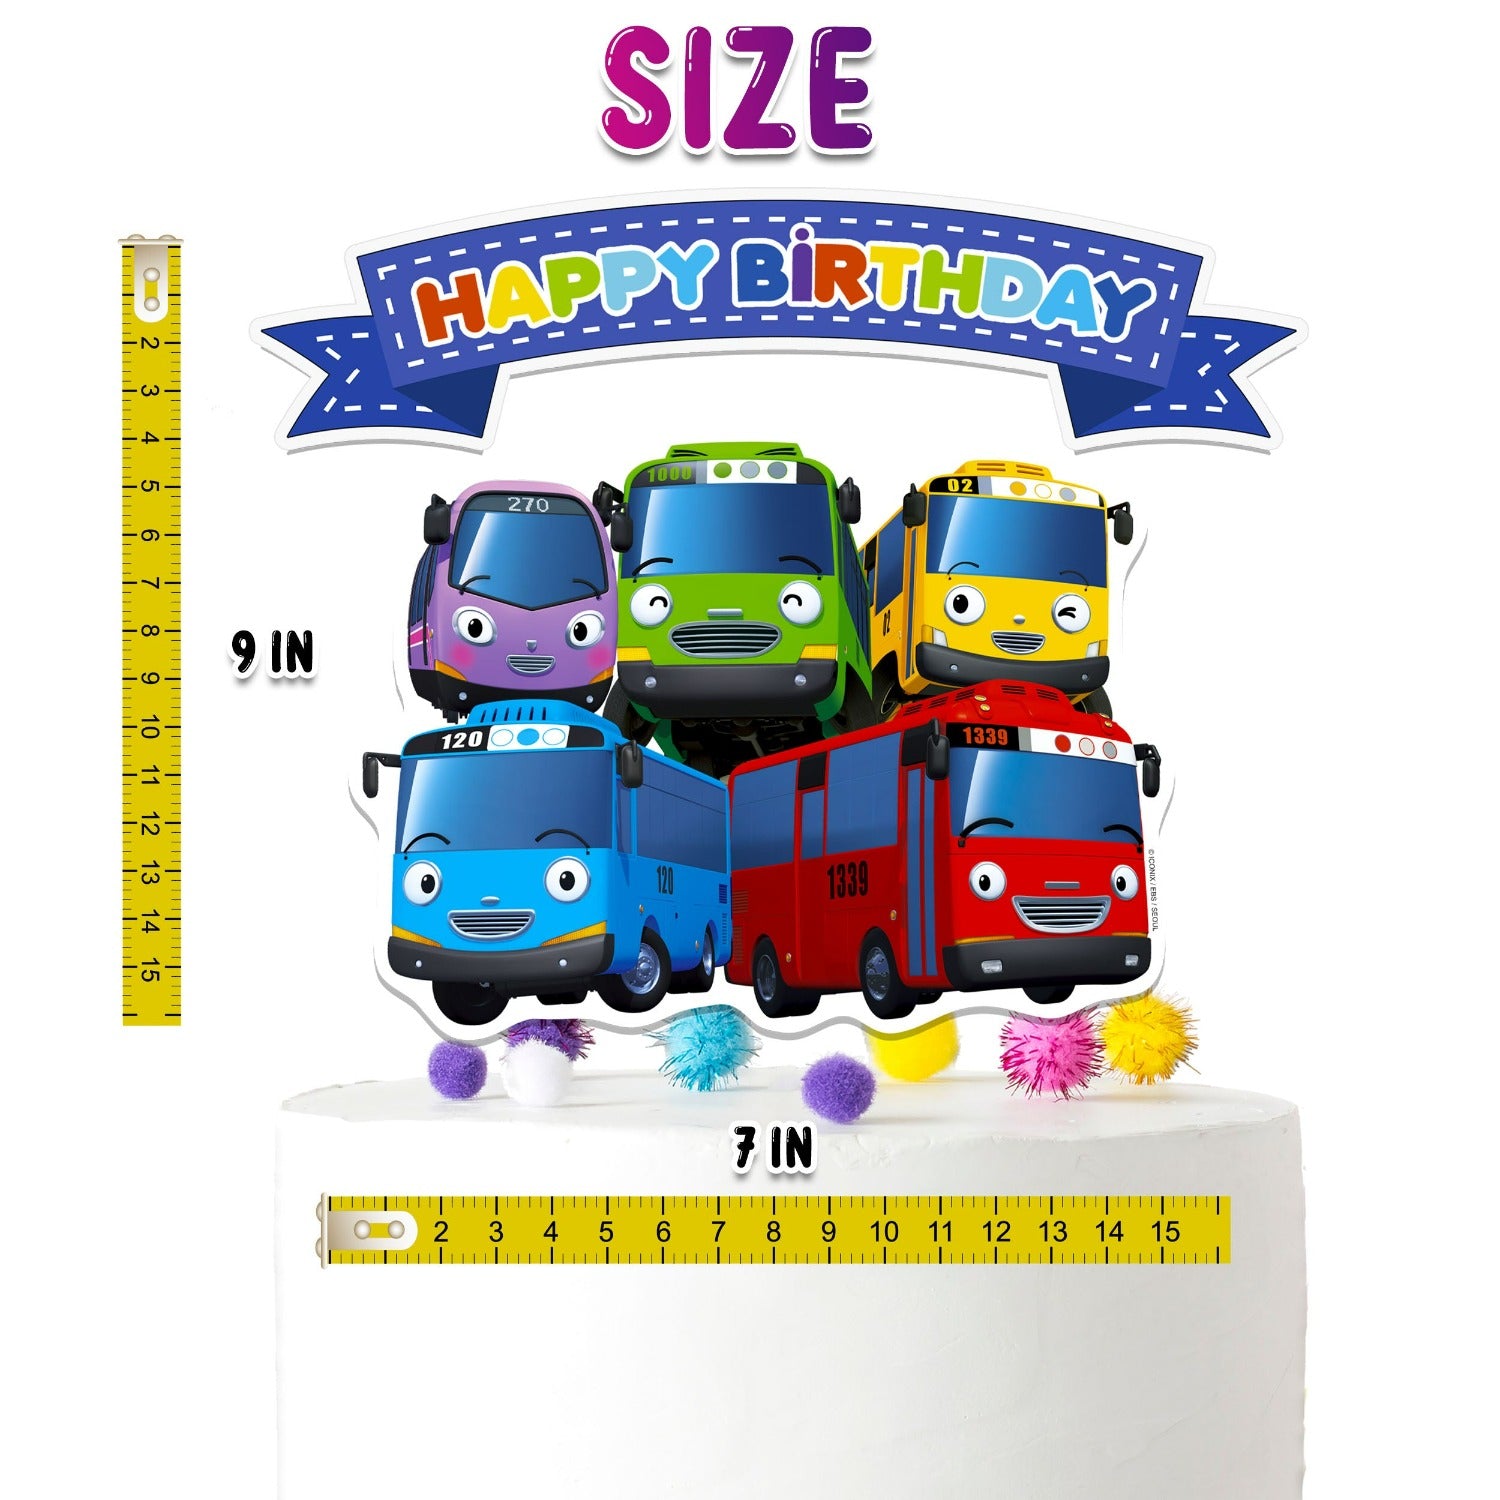 Tayo the Little Bus - Vibrant Cake Topper for Birthday Celebrations